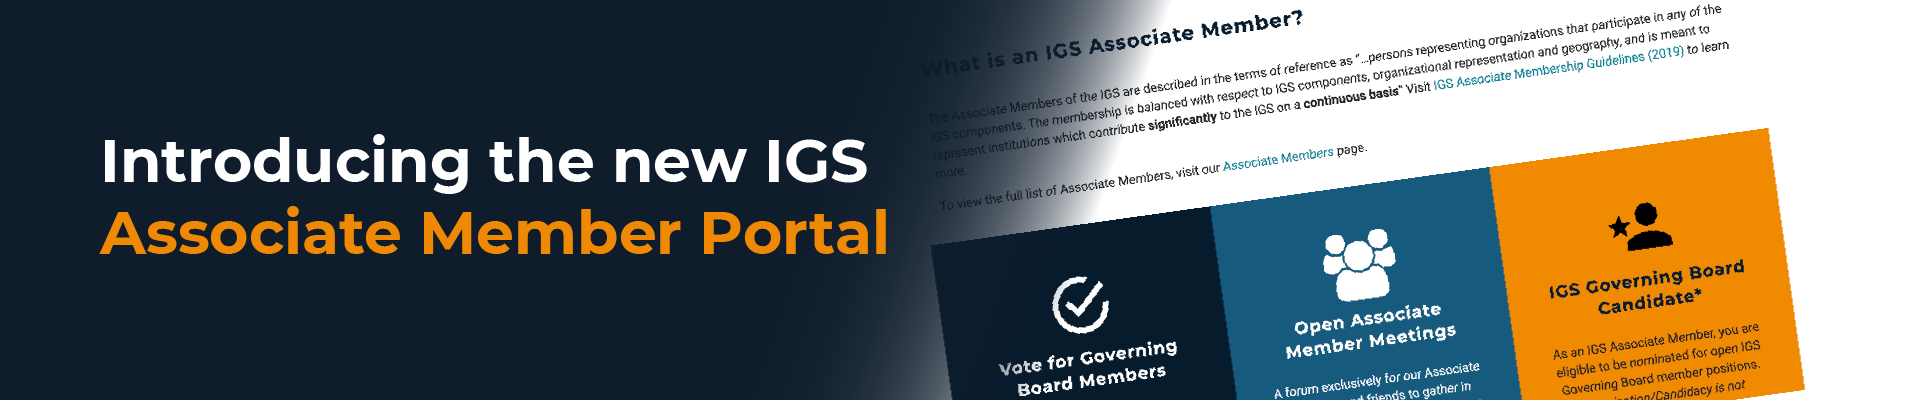 Introducing the new IGS Associate Member Portal